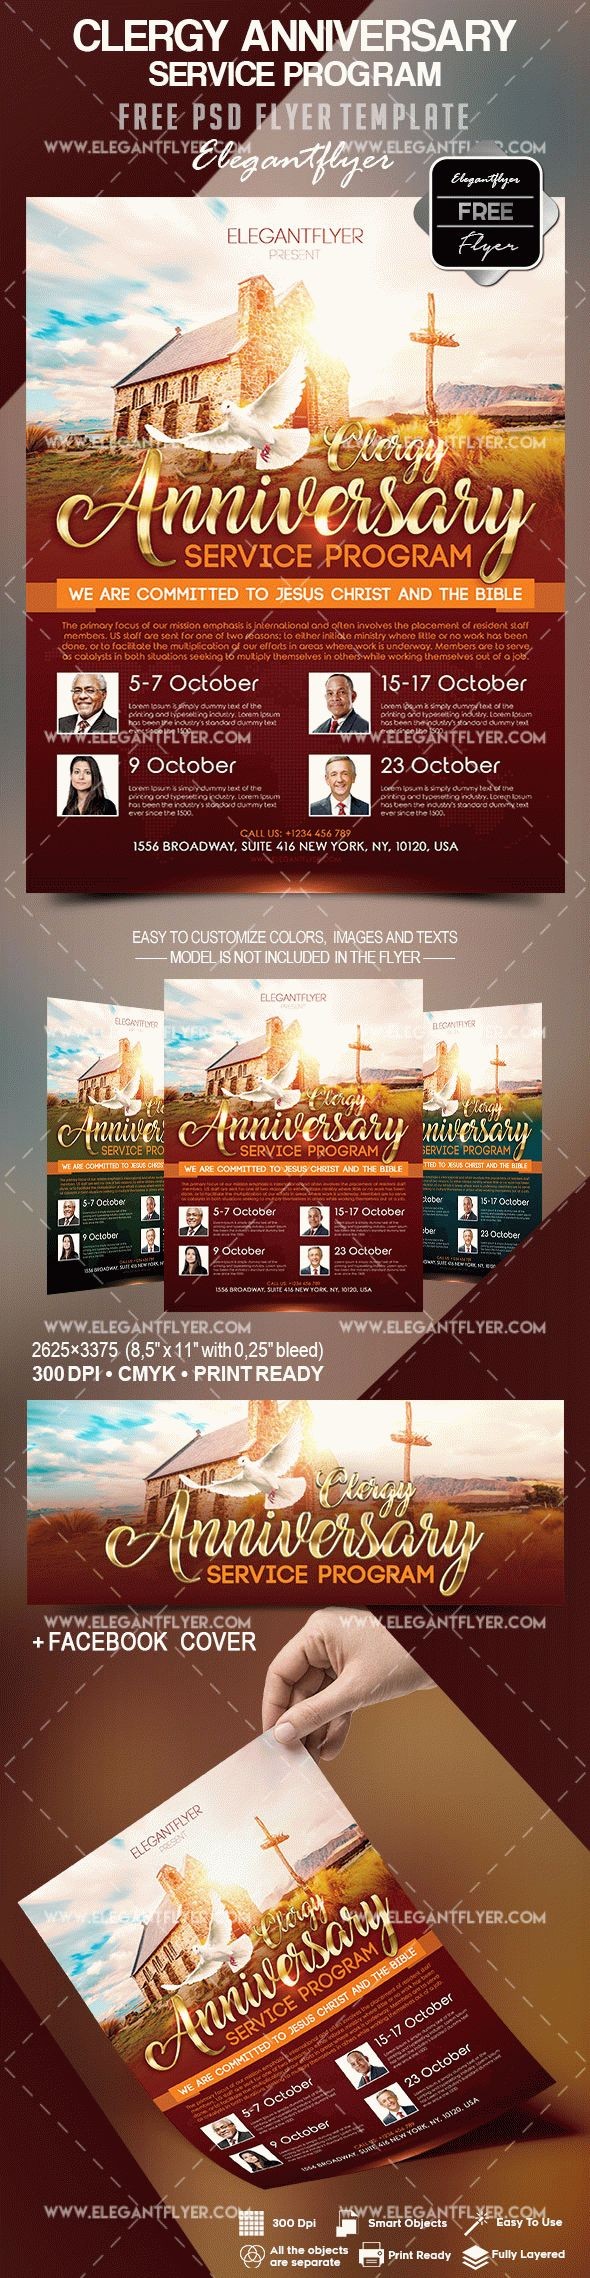 Clergy Anniversary Service Program by ElegantFlyer